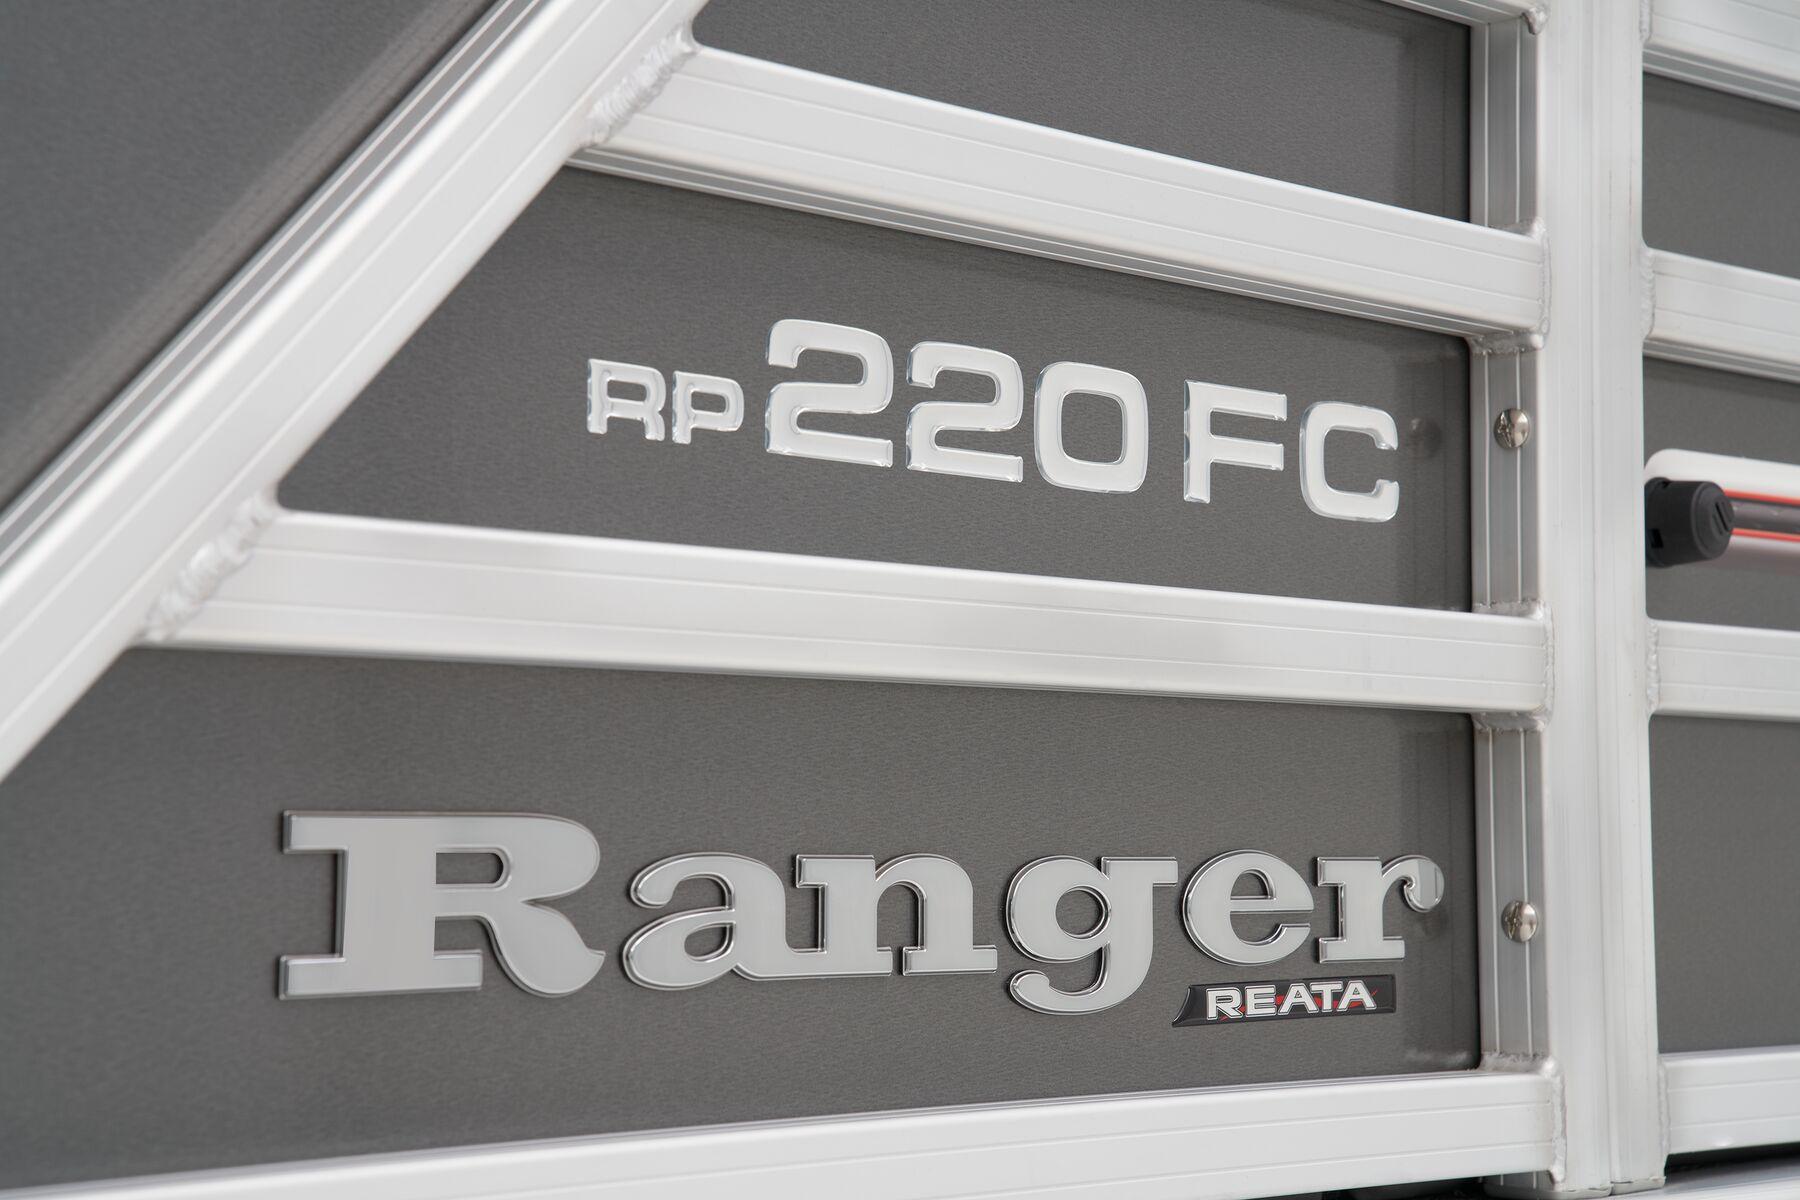 Ranger Reata 220FC